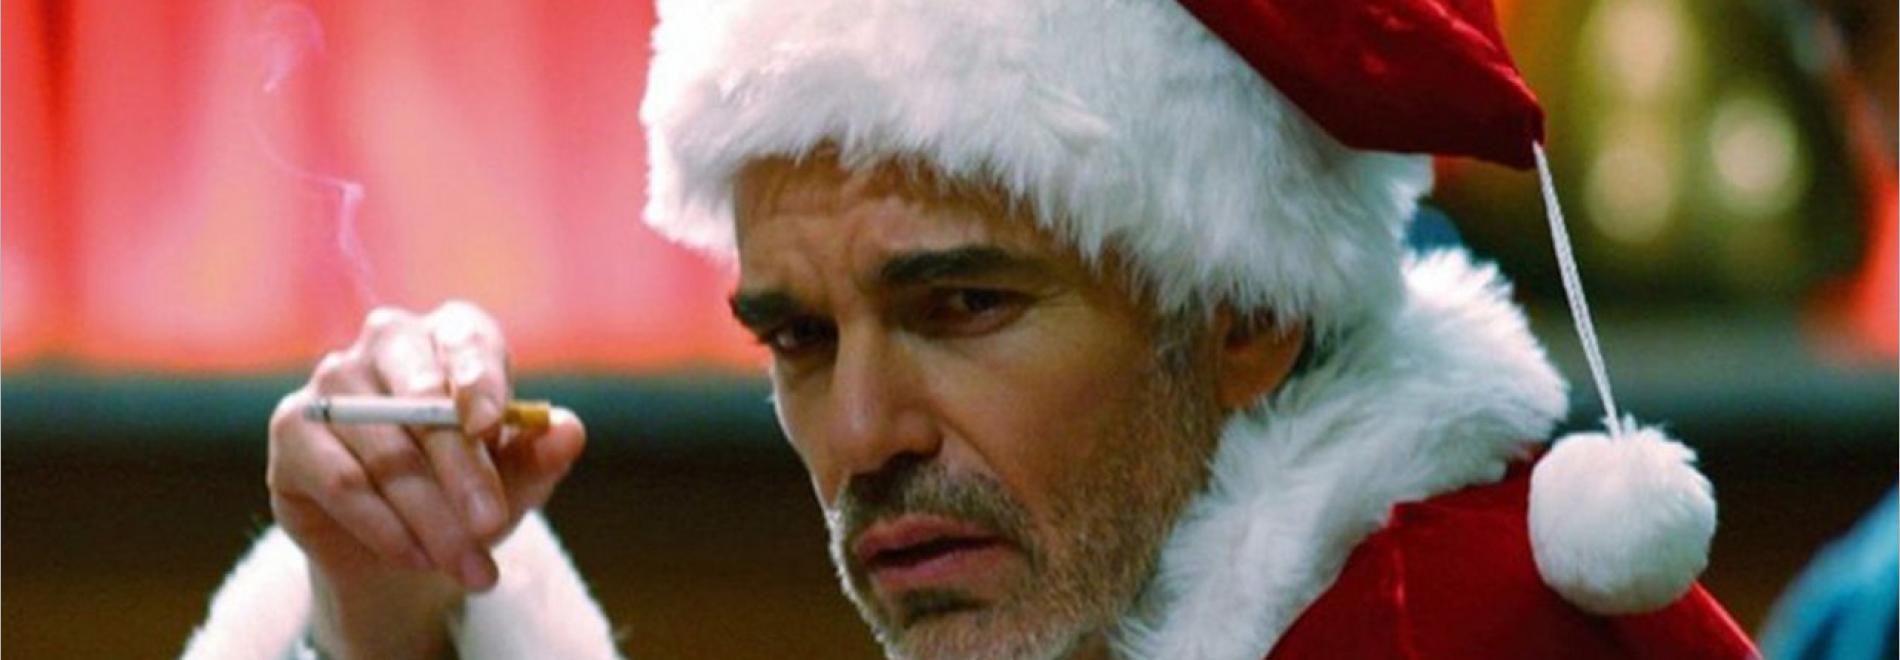 Bad Santa (Terry Zwigoff, 2003)